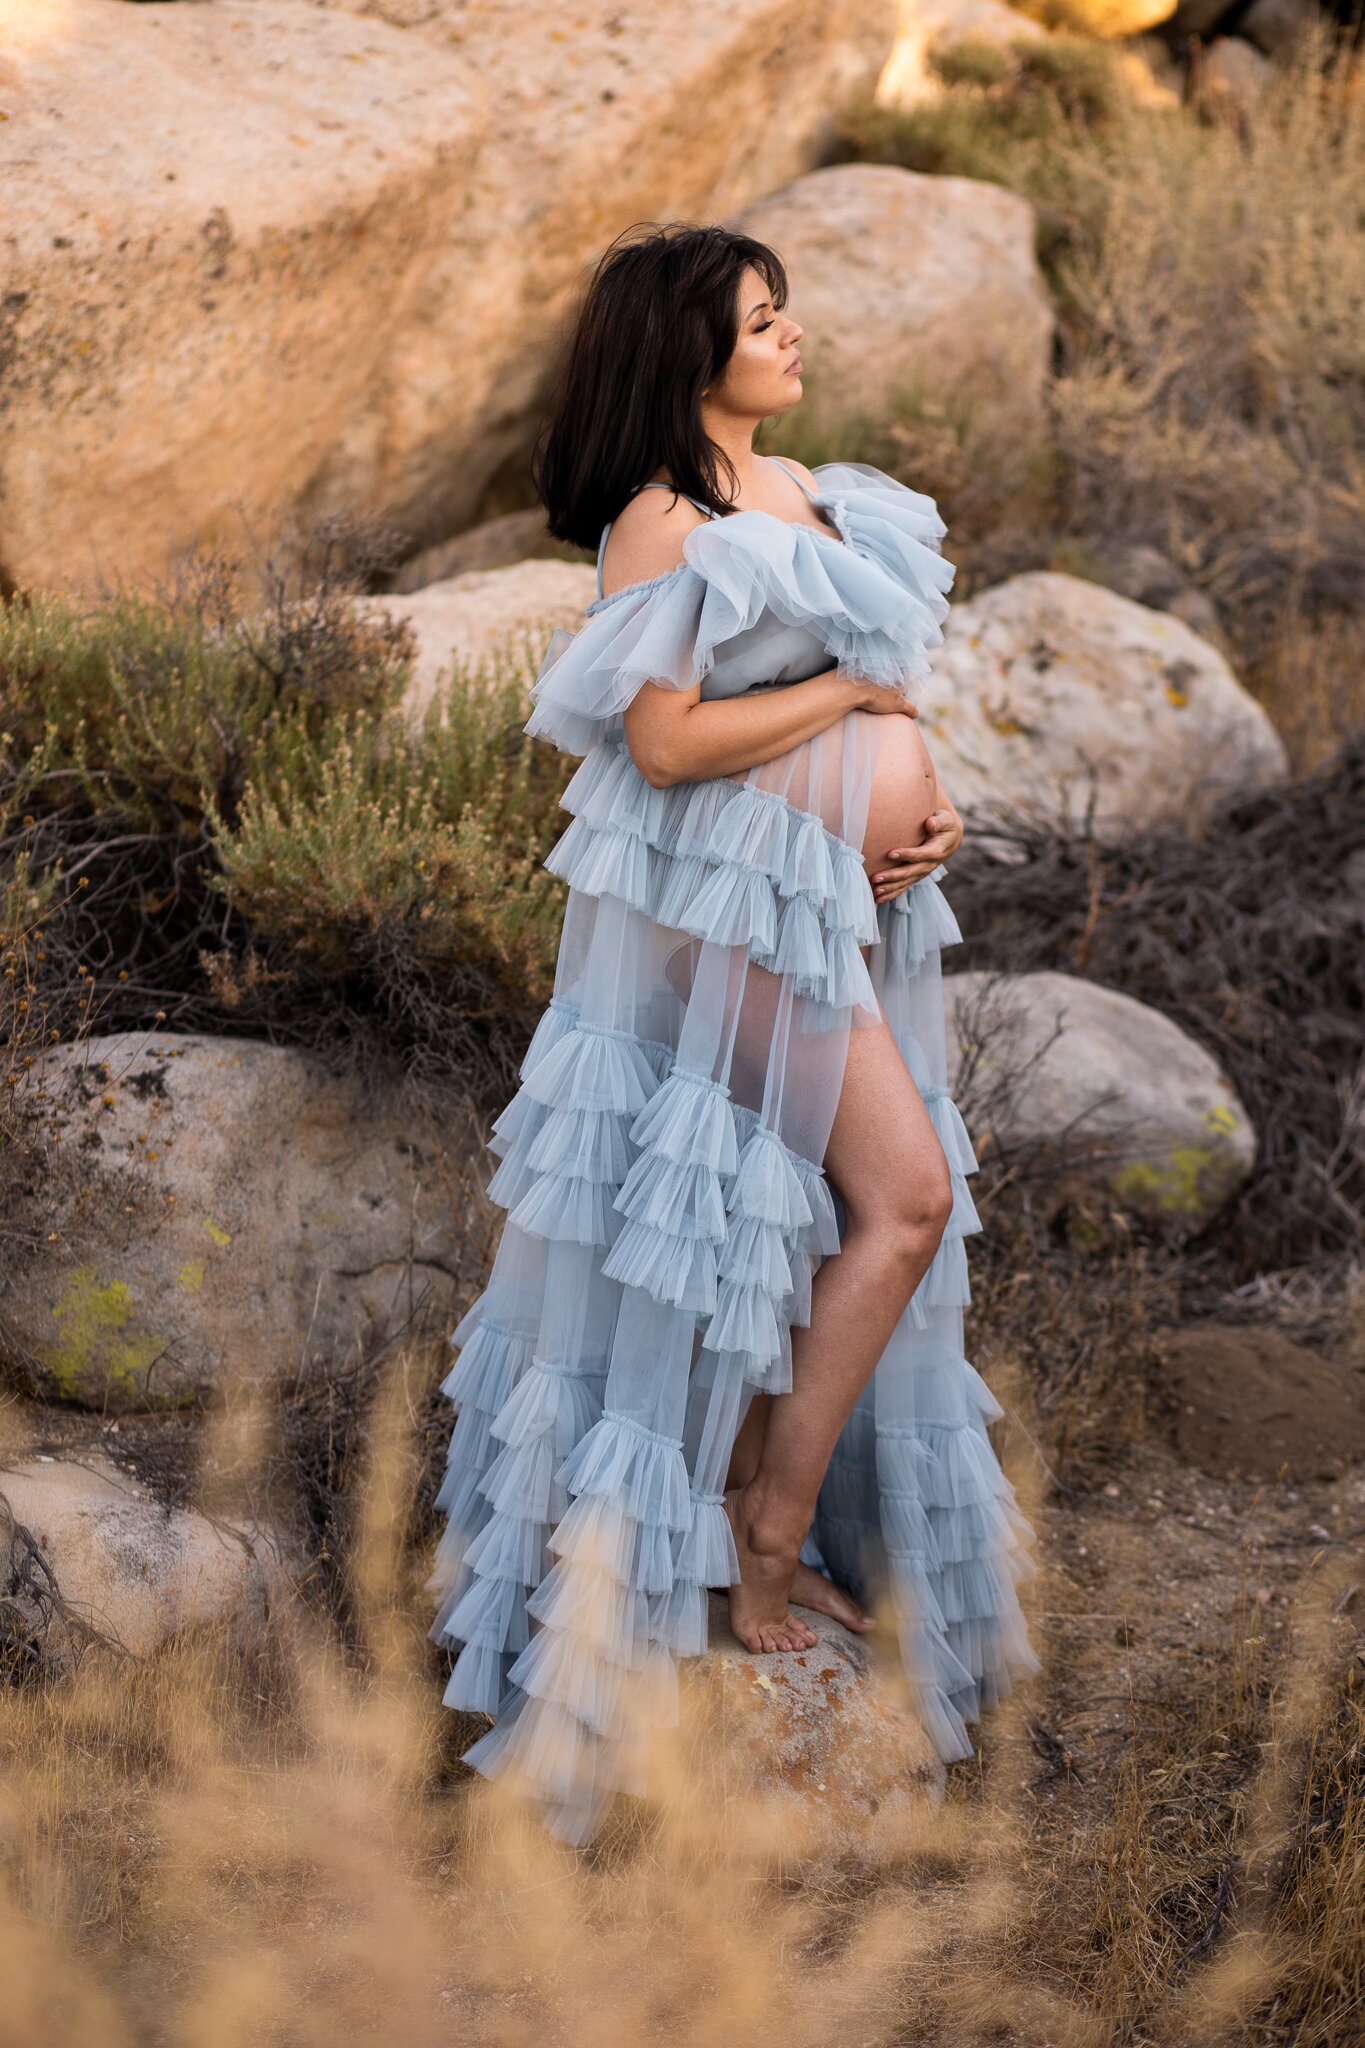 San diego-Maternity Phorographer.jpg